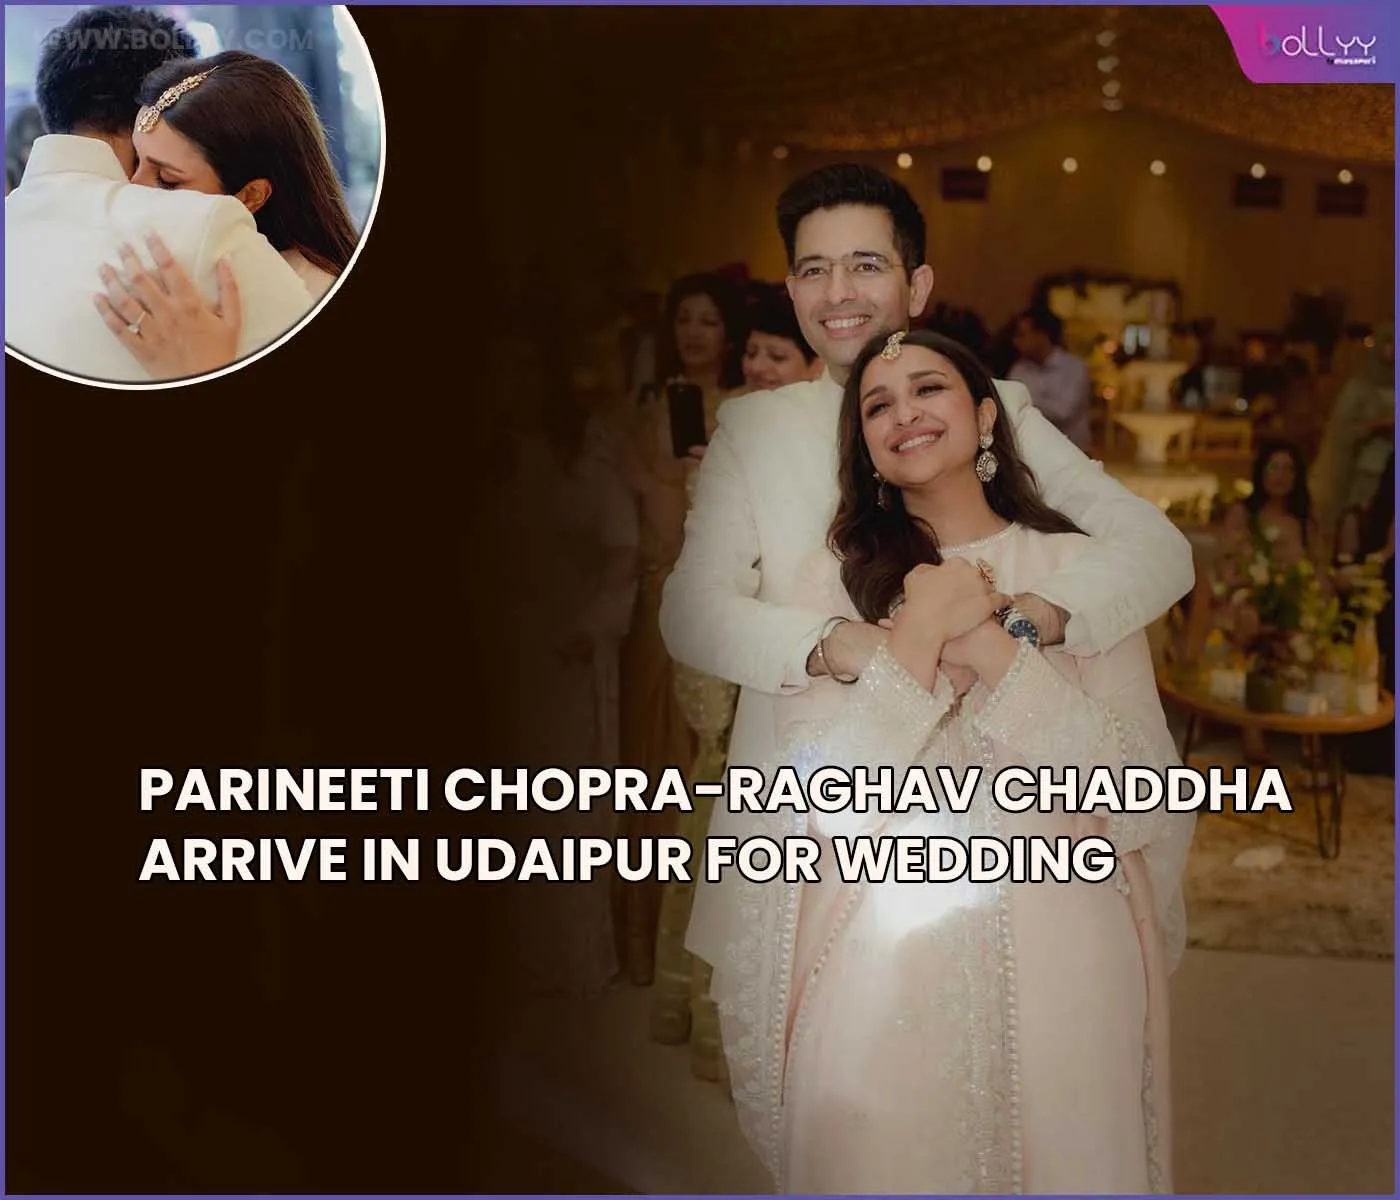 Parineeti-Raghav Chaddha arrive in Udaipur for wedding